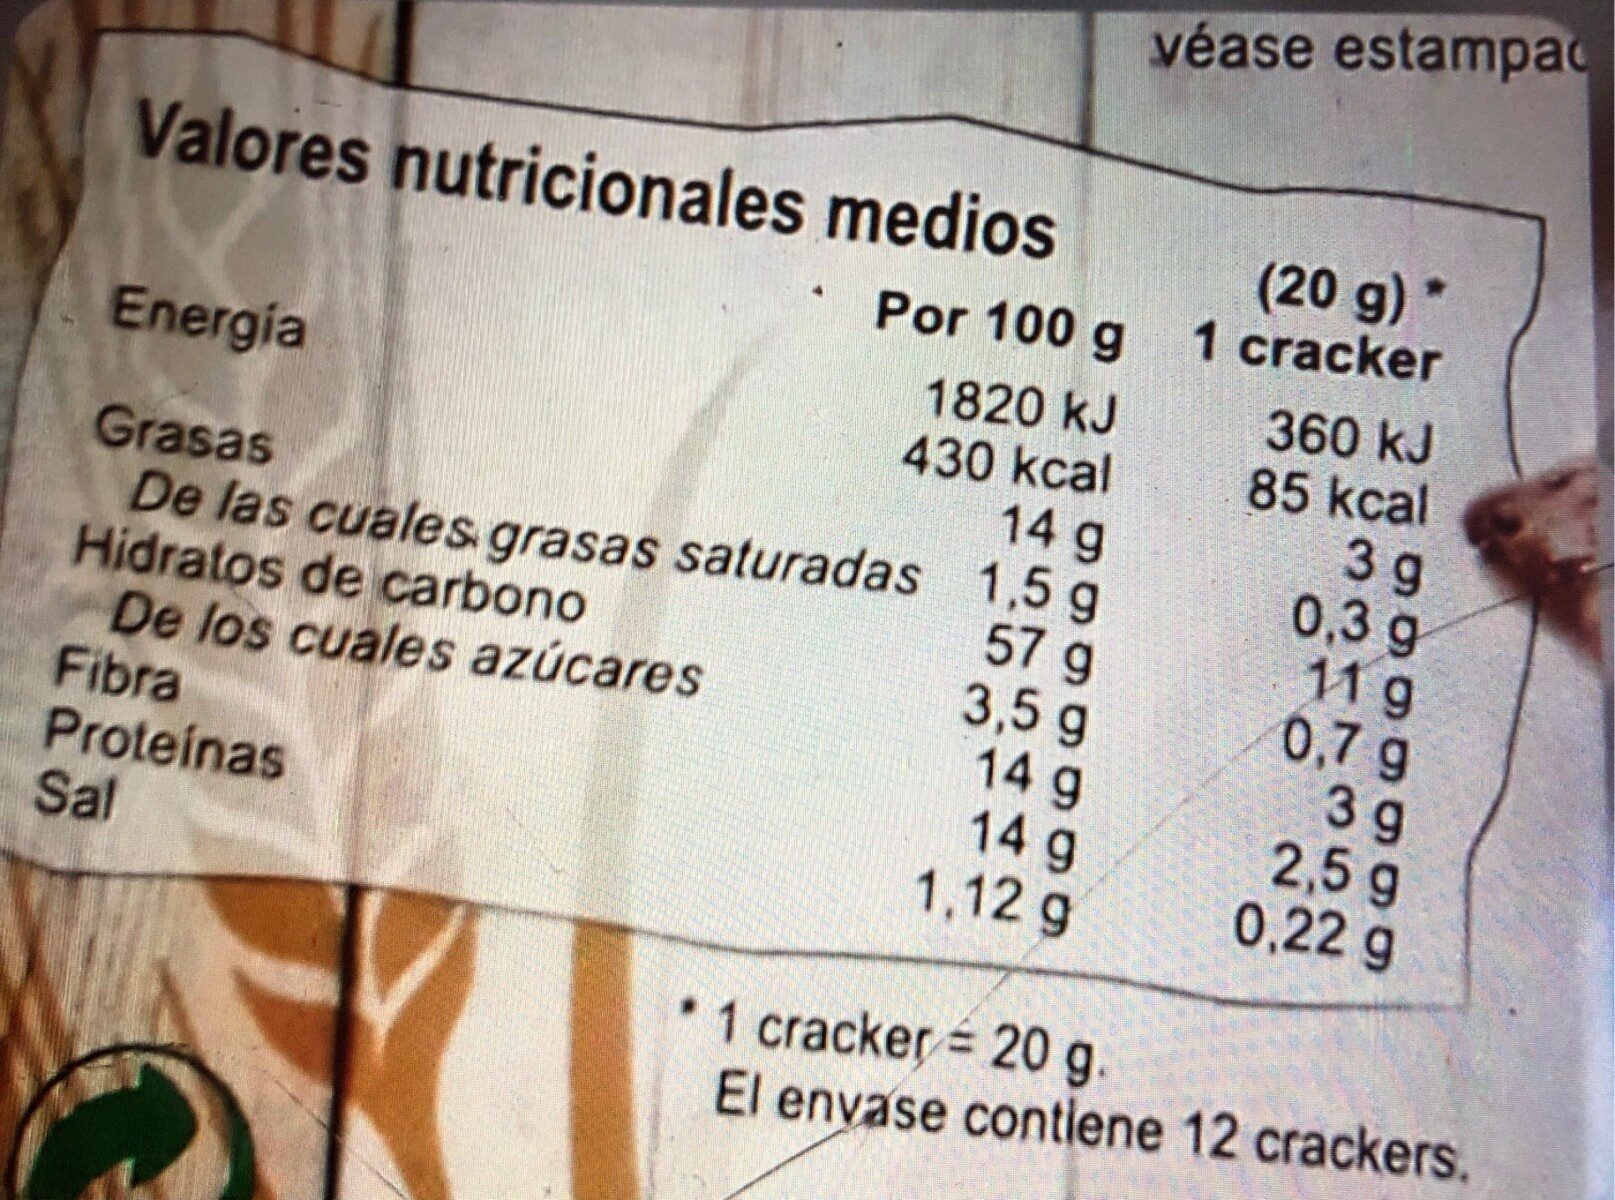 crackers de espelta - Nutrition facts - fr